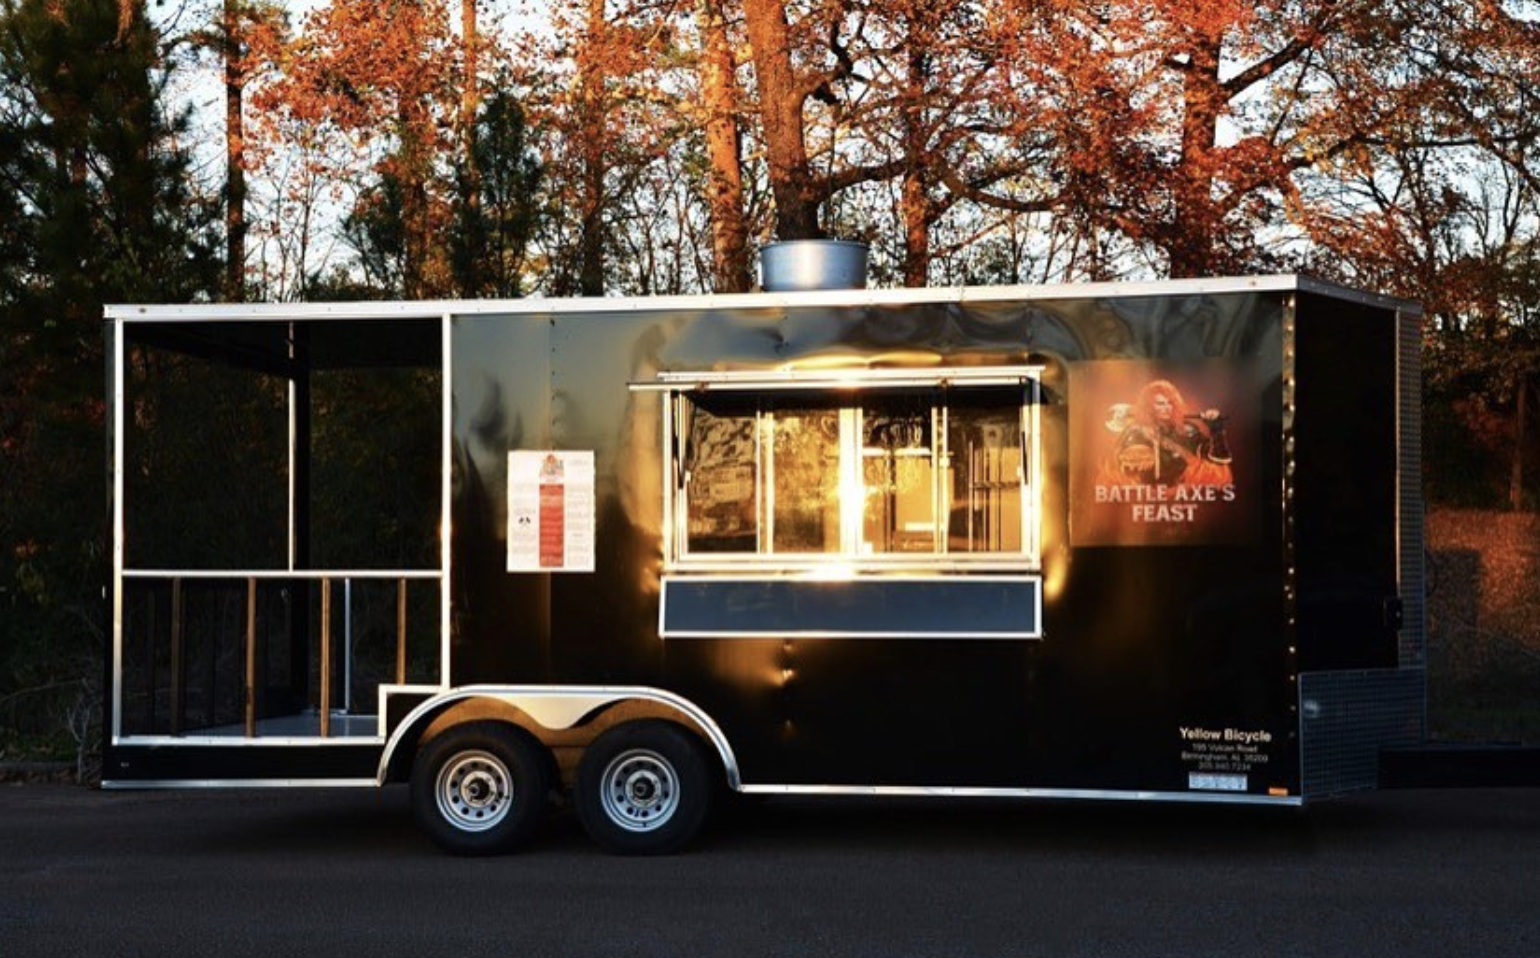 Prepare for Battle Axe’s Feast: Birmingham’s newest food truck